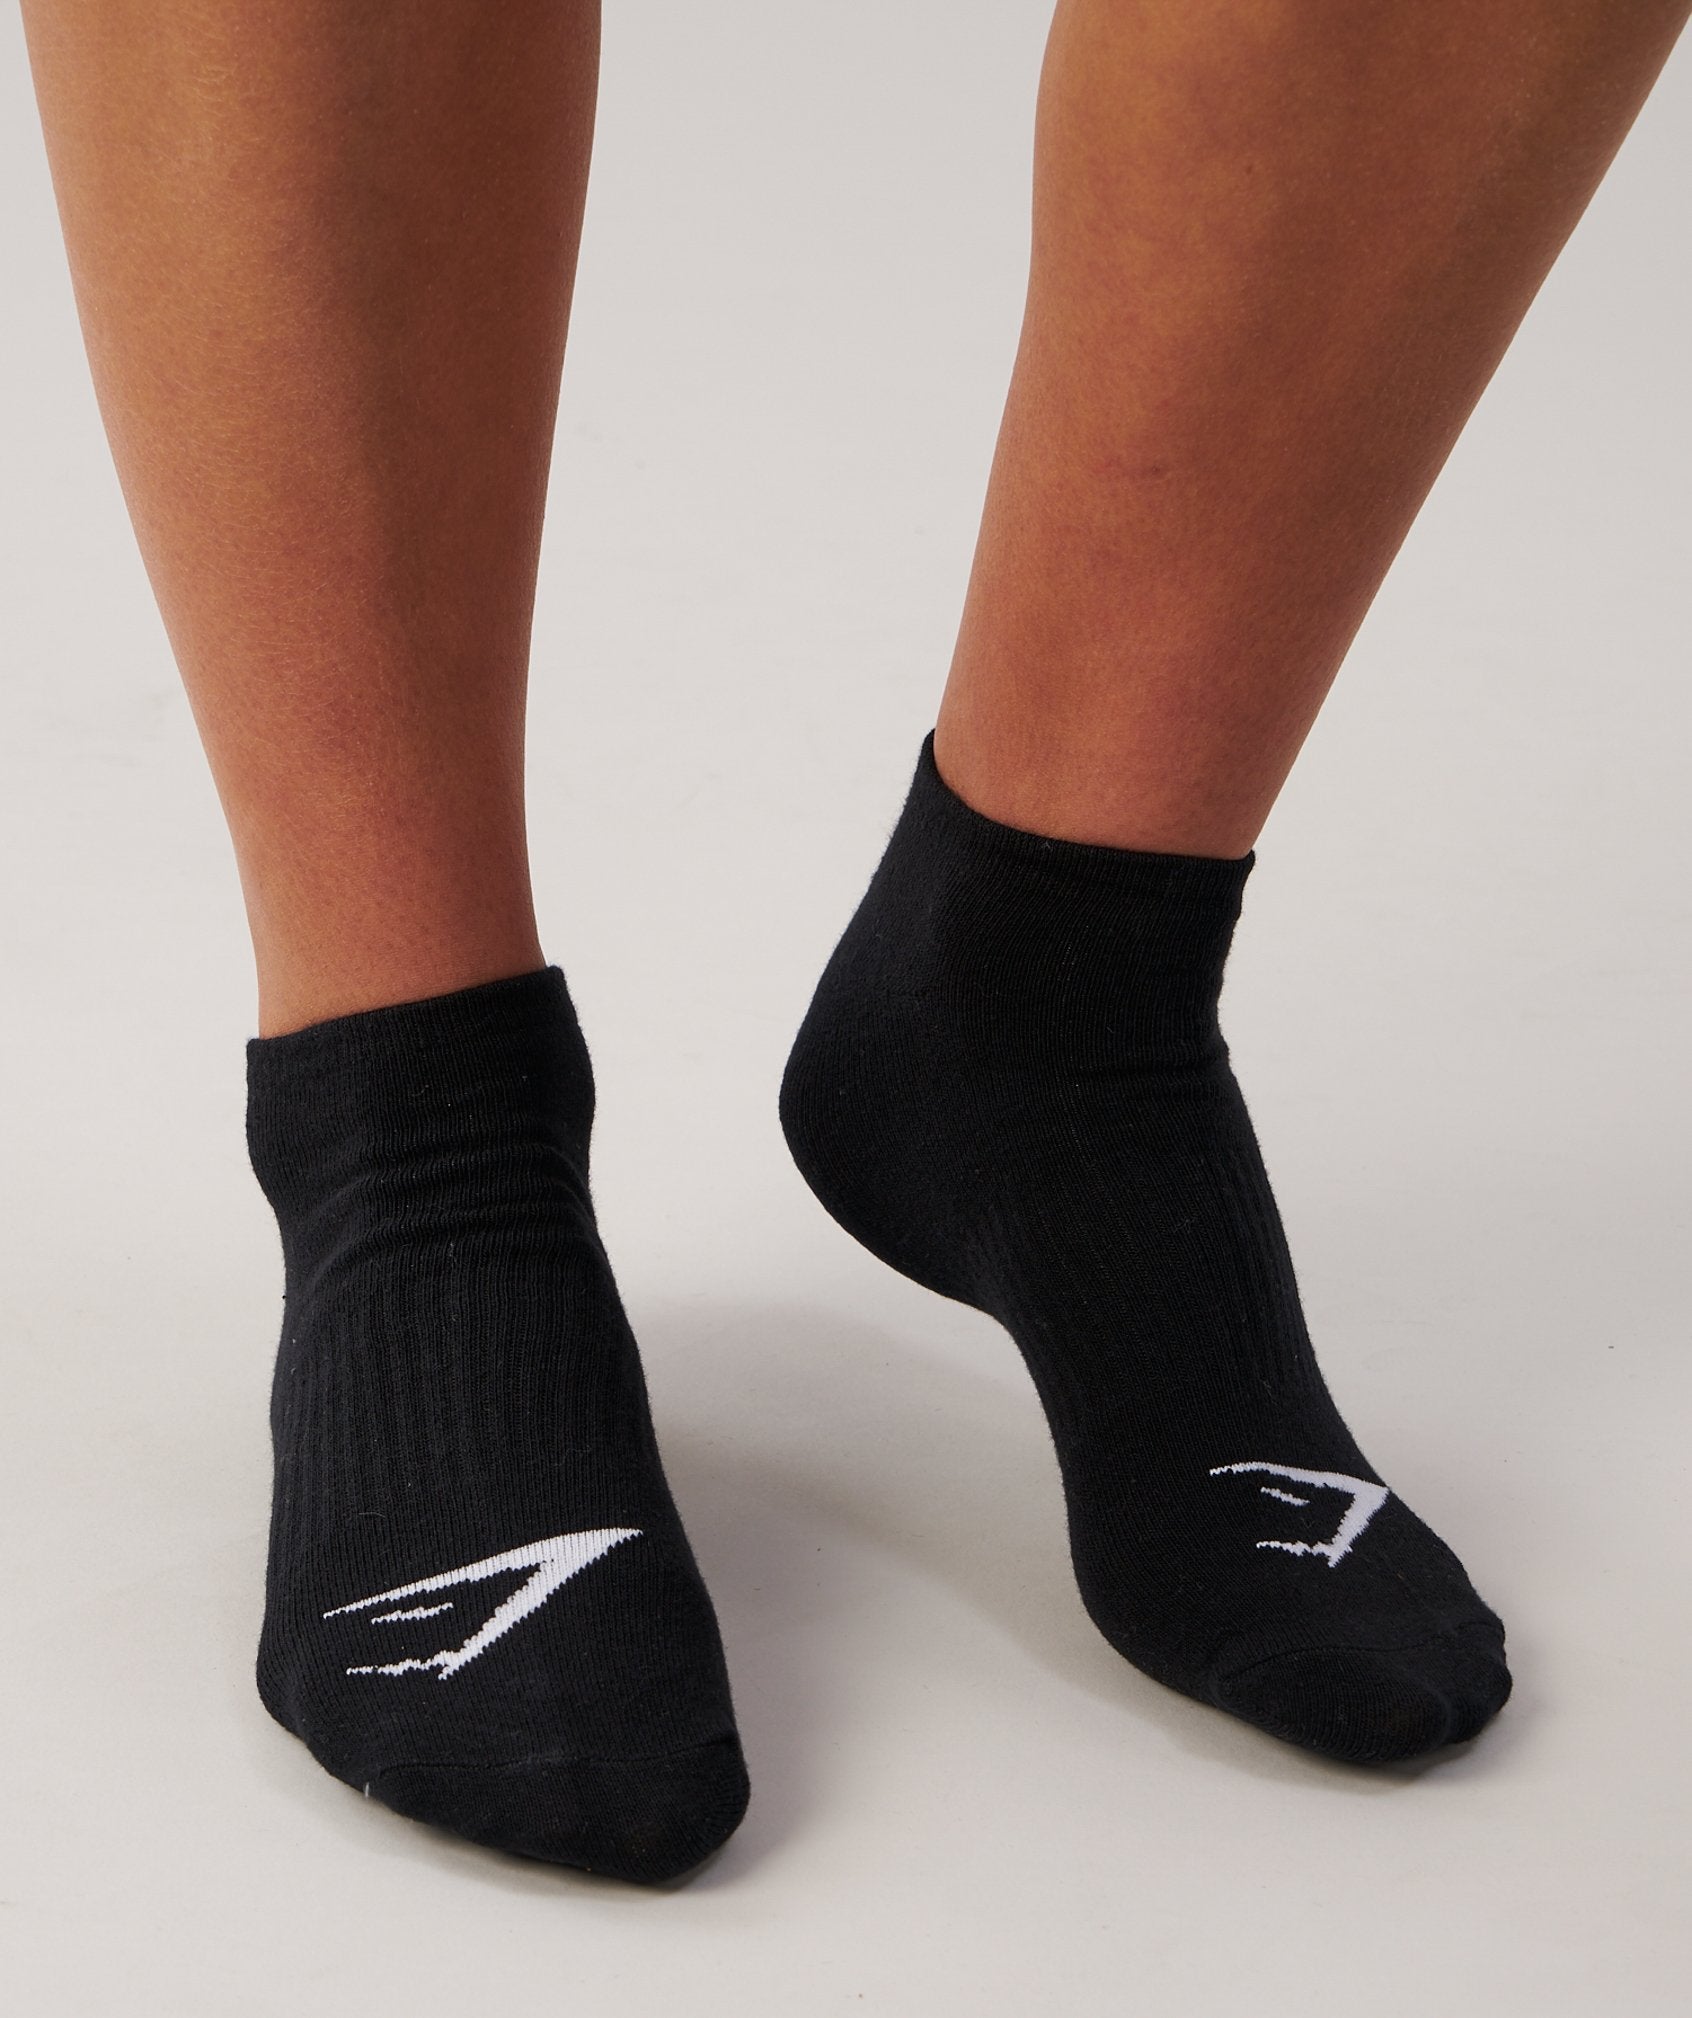 Womens Trainer Socks 3pk in Black - view 5